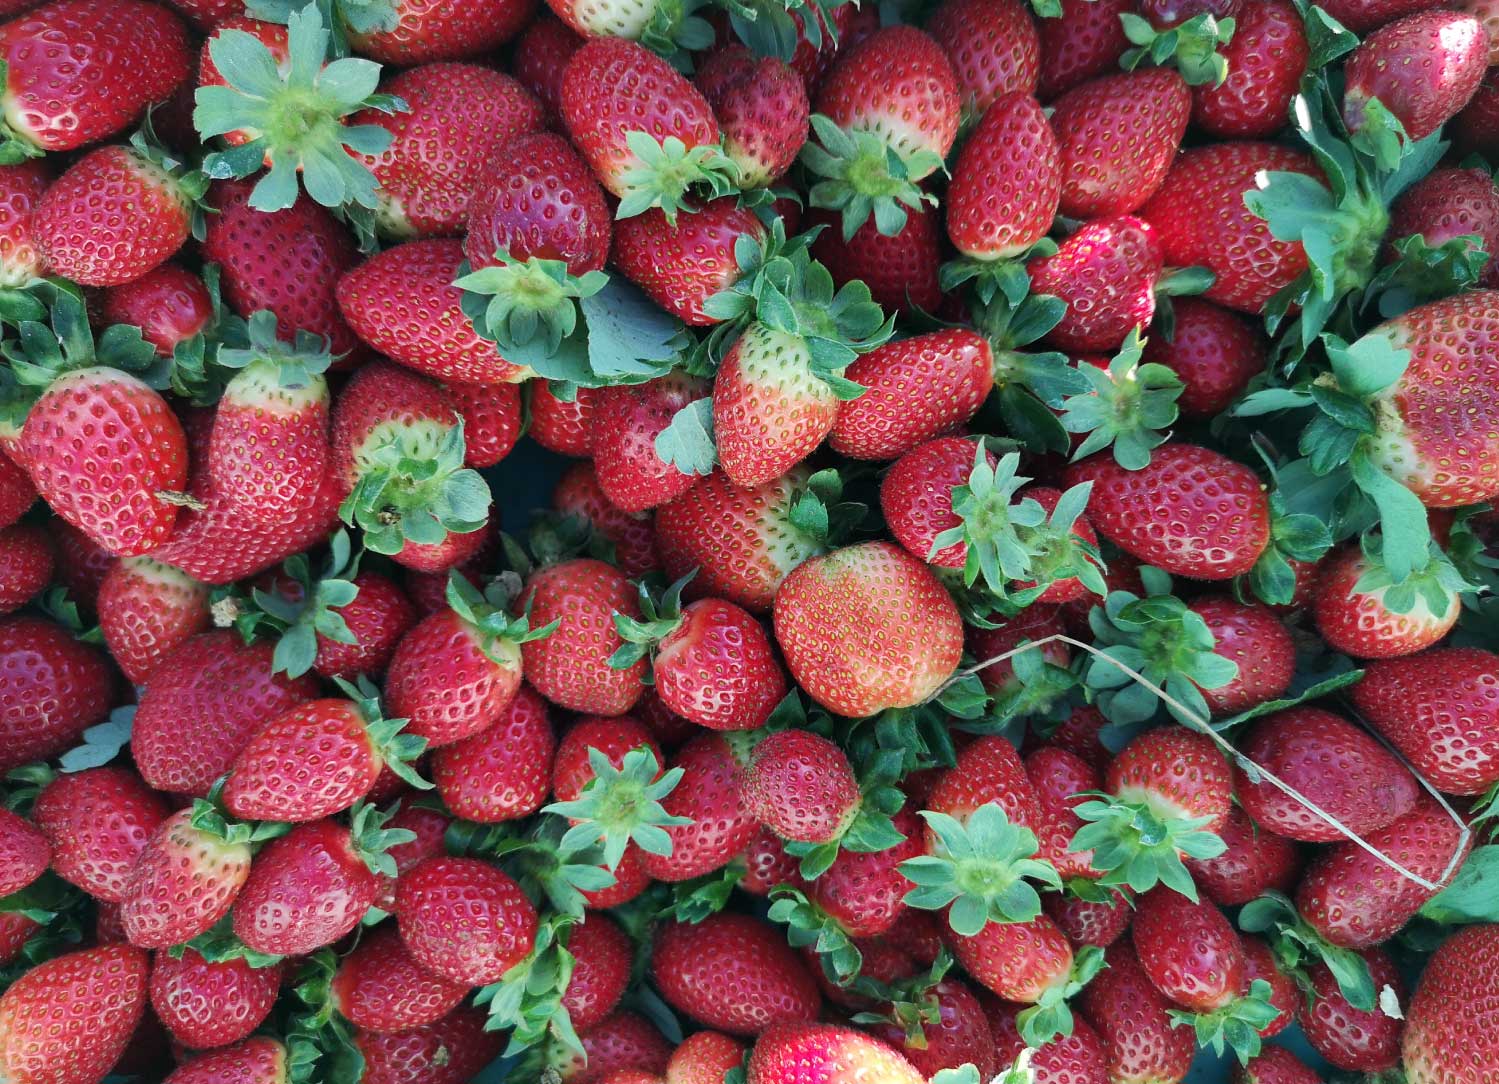 strawberries-fresh-malta-7-health-benefits-mgarr